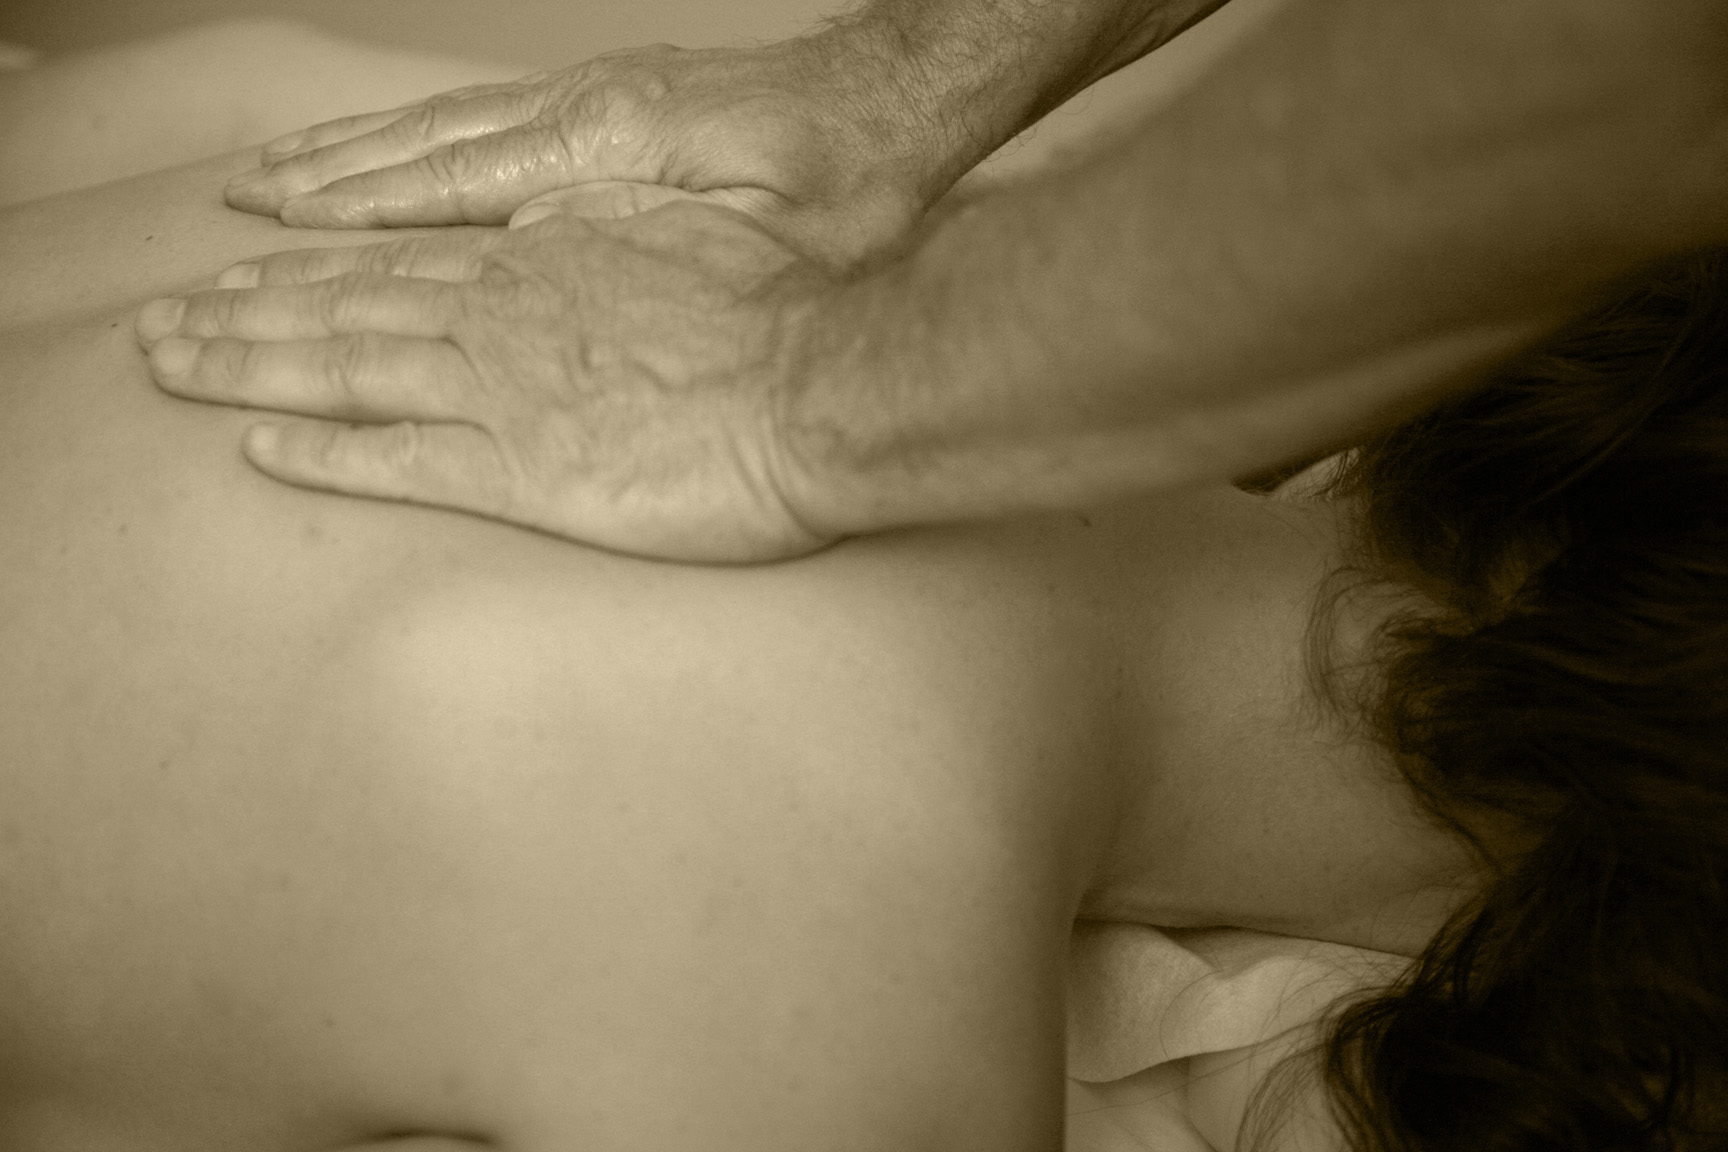 FTS Therapeutic Massage LLC